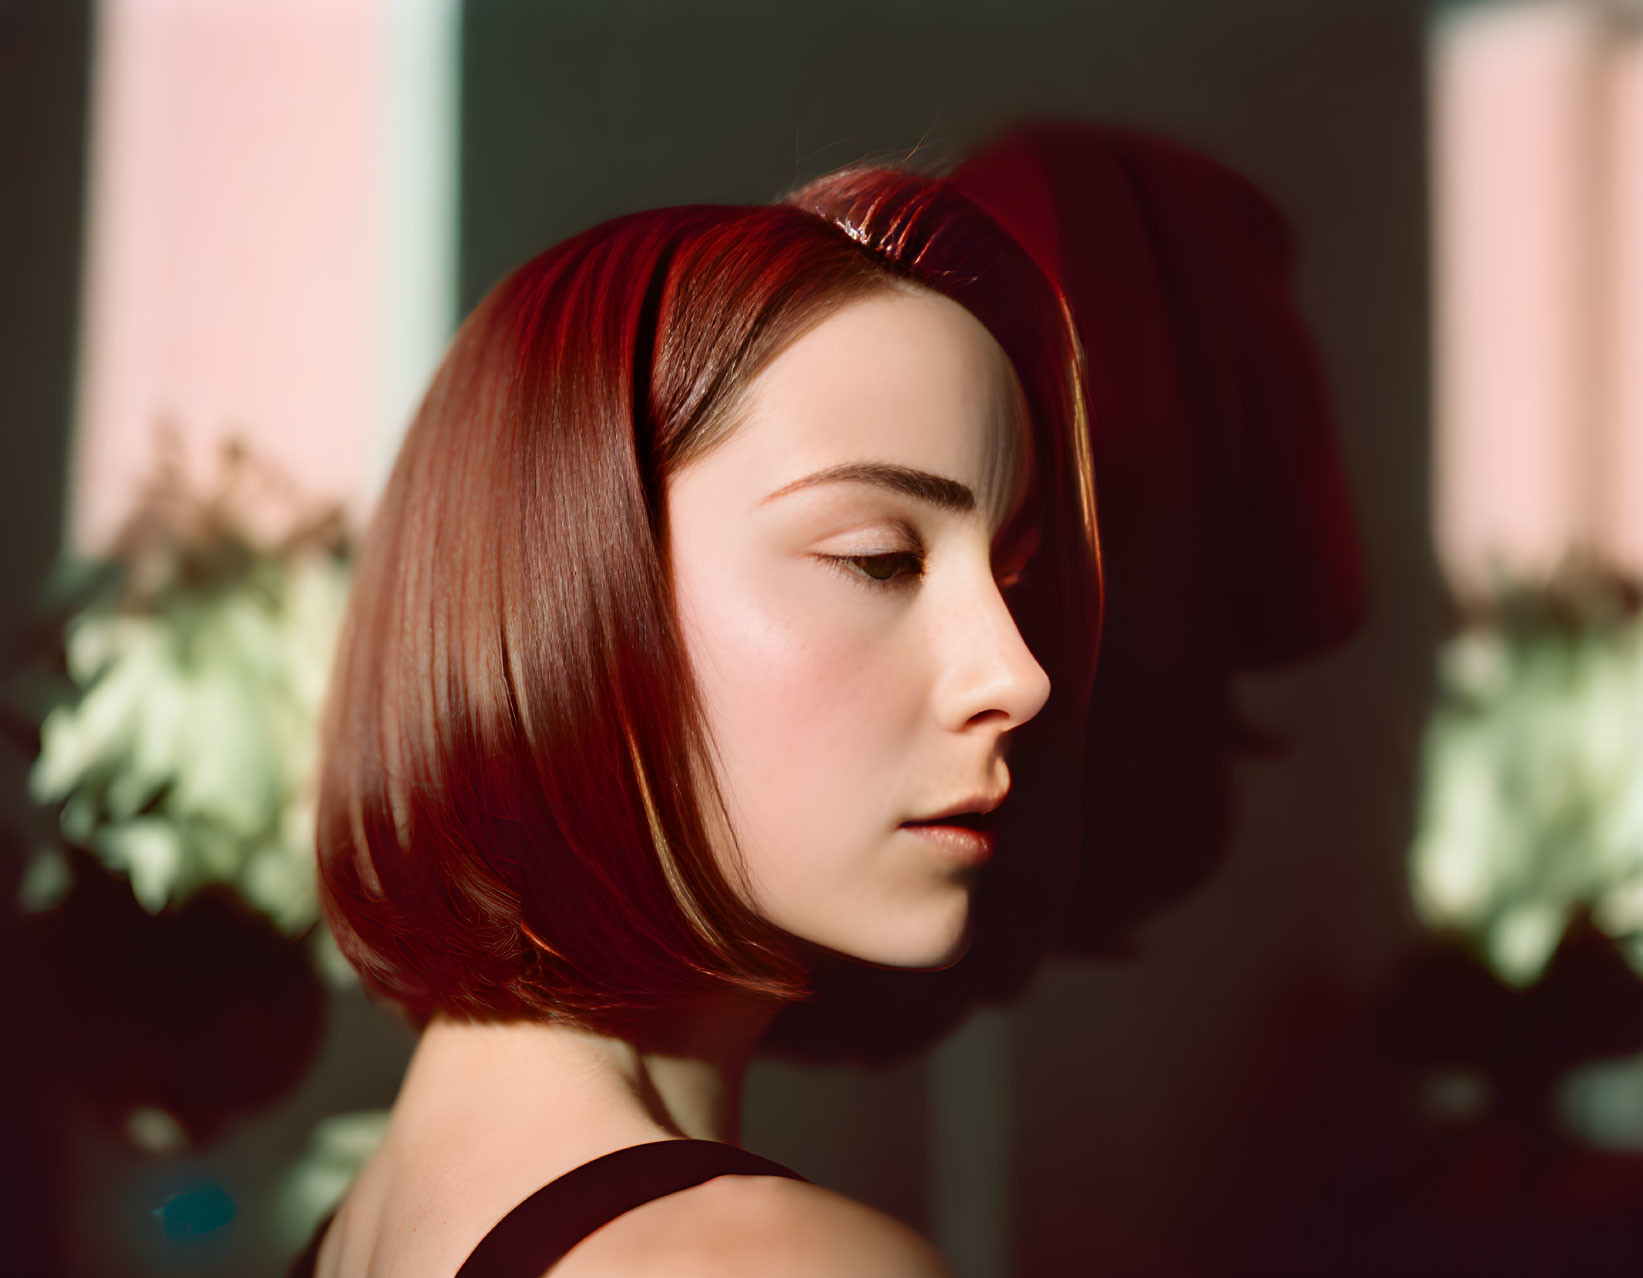 Sleek Asymmetrical Red Bob Haircut on Woman with Thoughtful Gaze